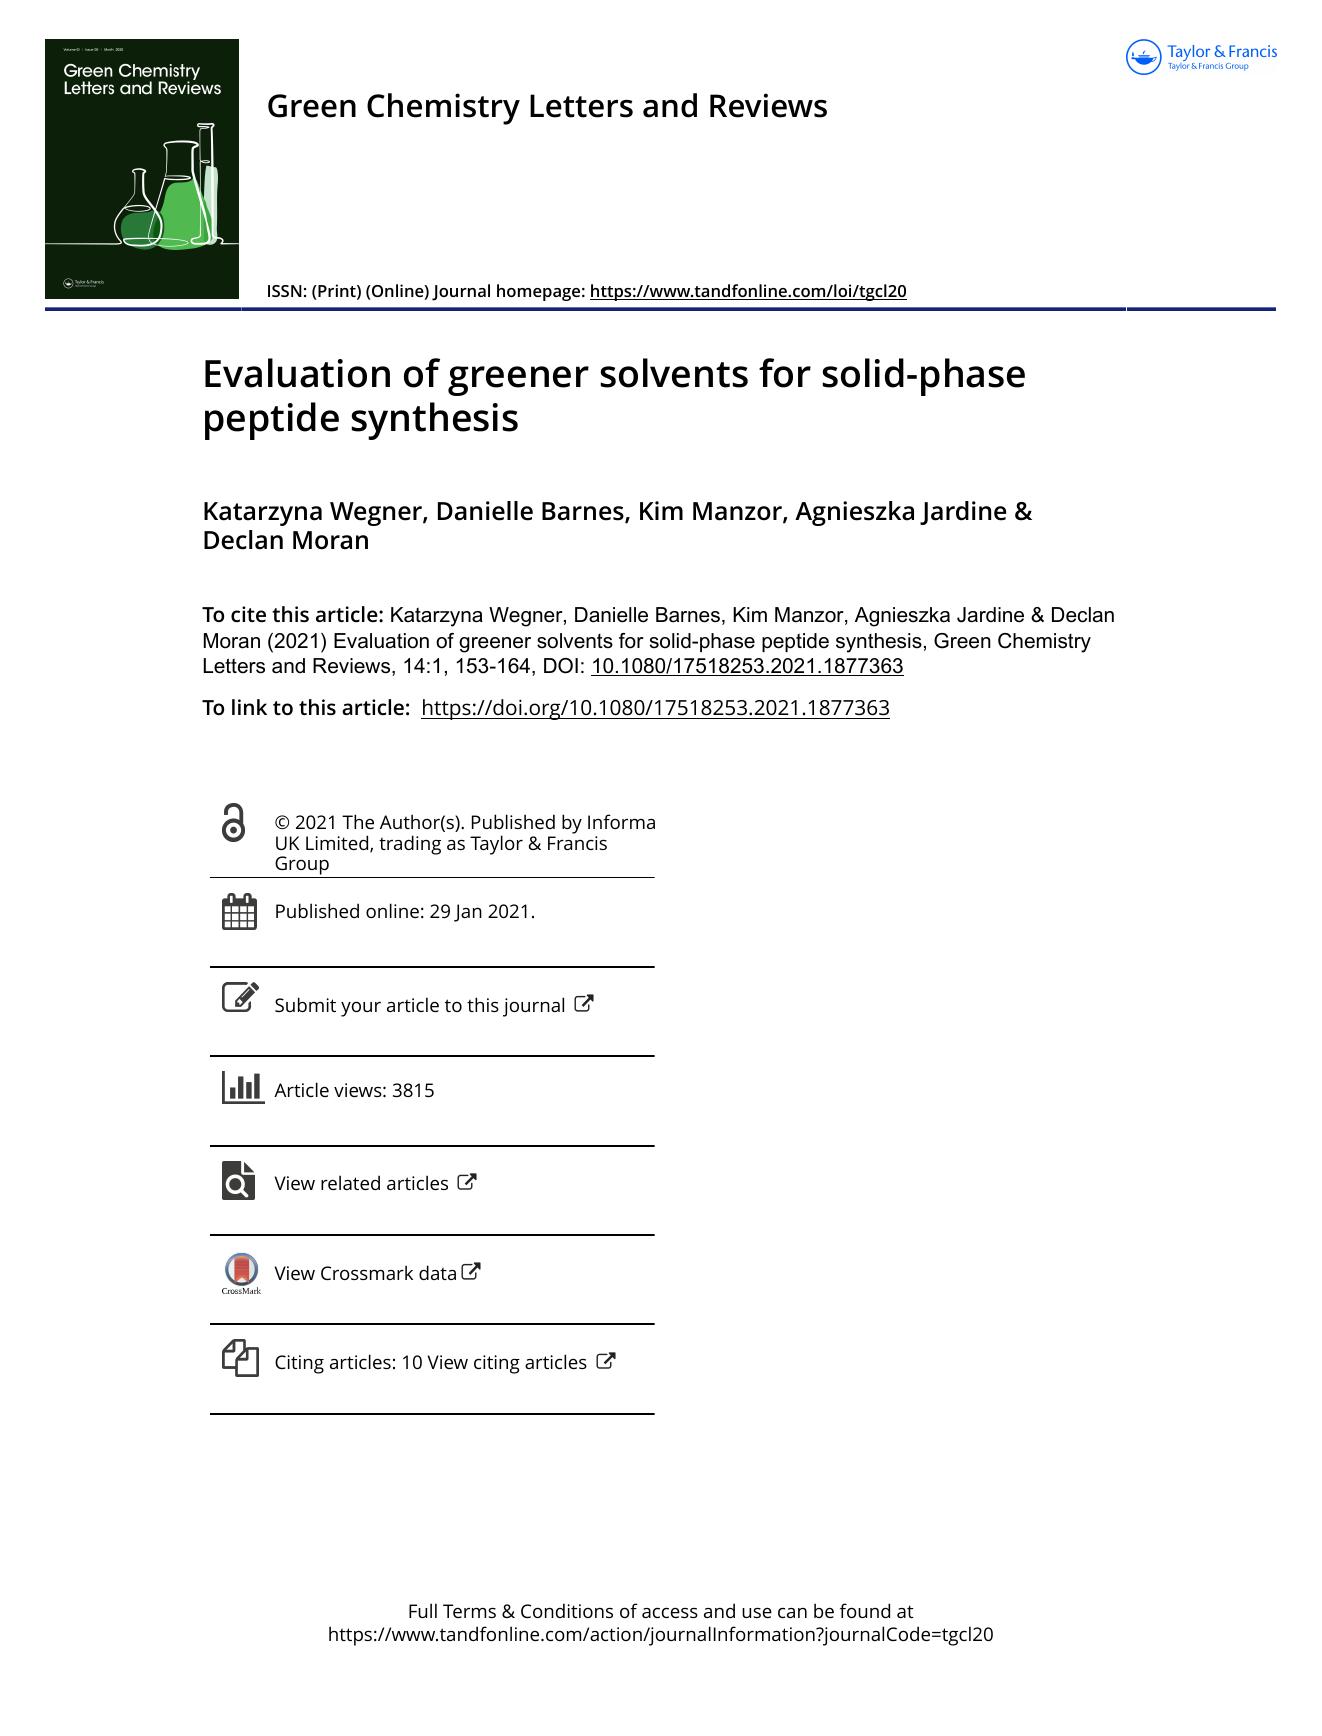 Evaluation of greener solvents for solid-phase peptide synthesis by Katarzyna Wegner & Danielle Barnes & Kim Manzor & Agnieszka Jardine & Declan Moran